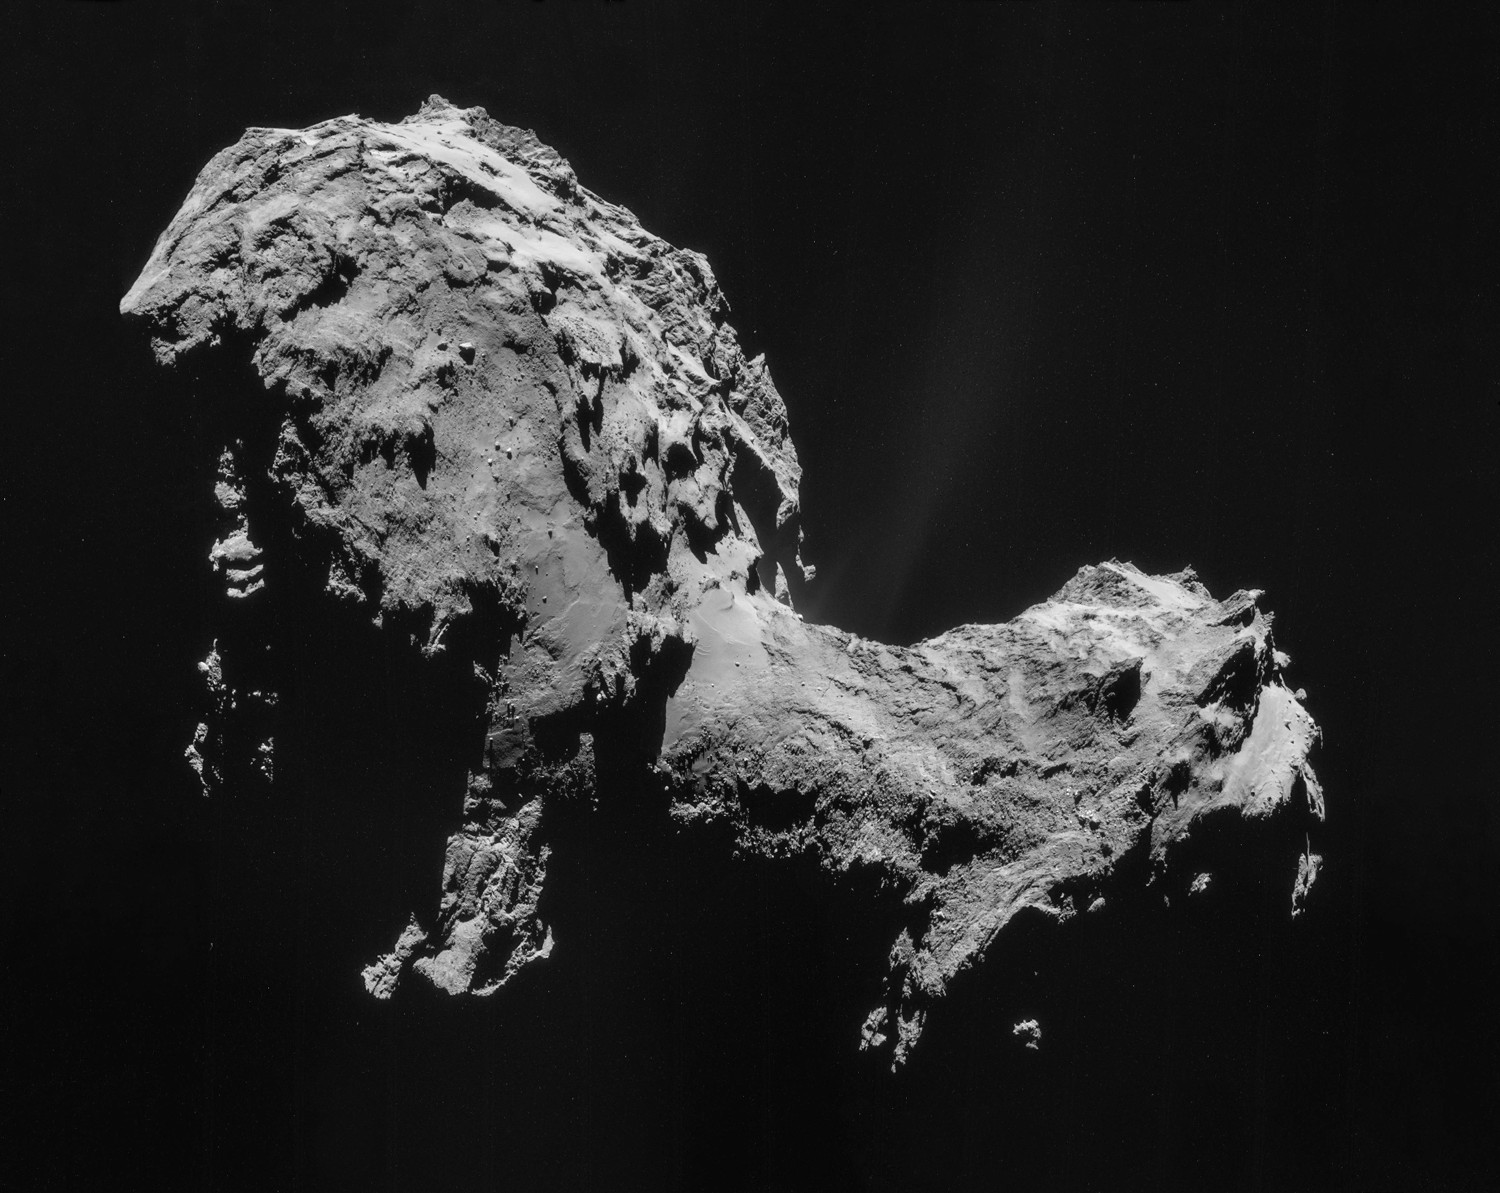 La comète 67P/Churyumov-Gerasimenko photographiée depuis la sonde Rosetta le 19 septembre 2014. © Esa, Navcam